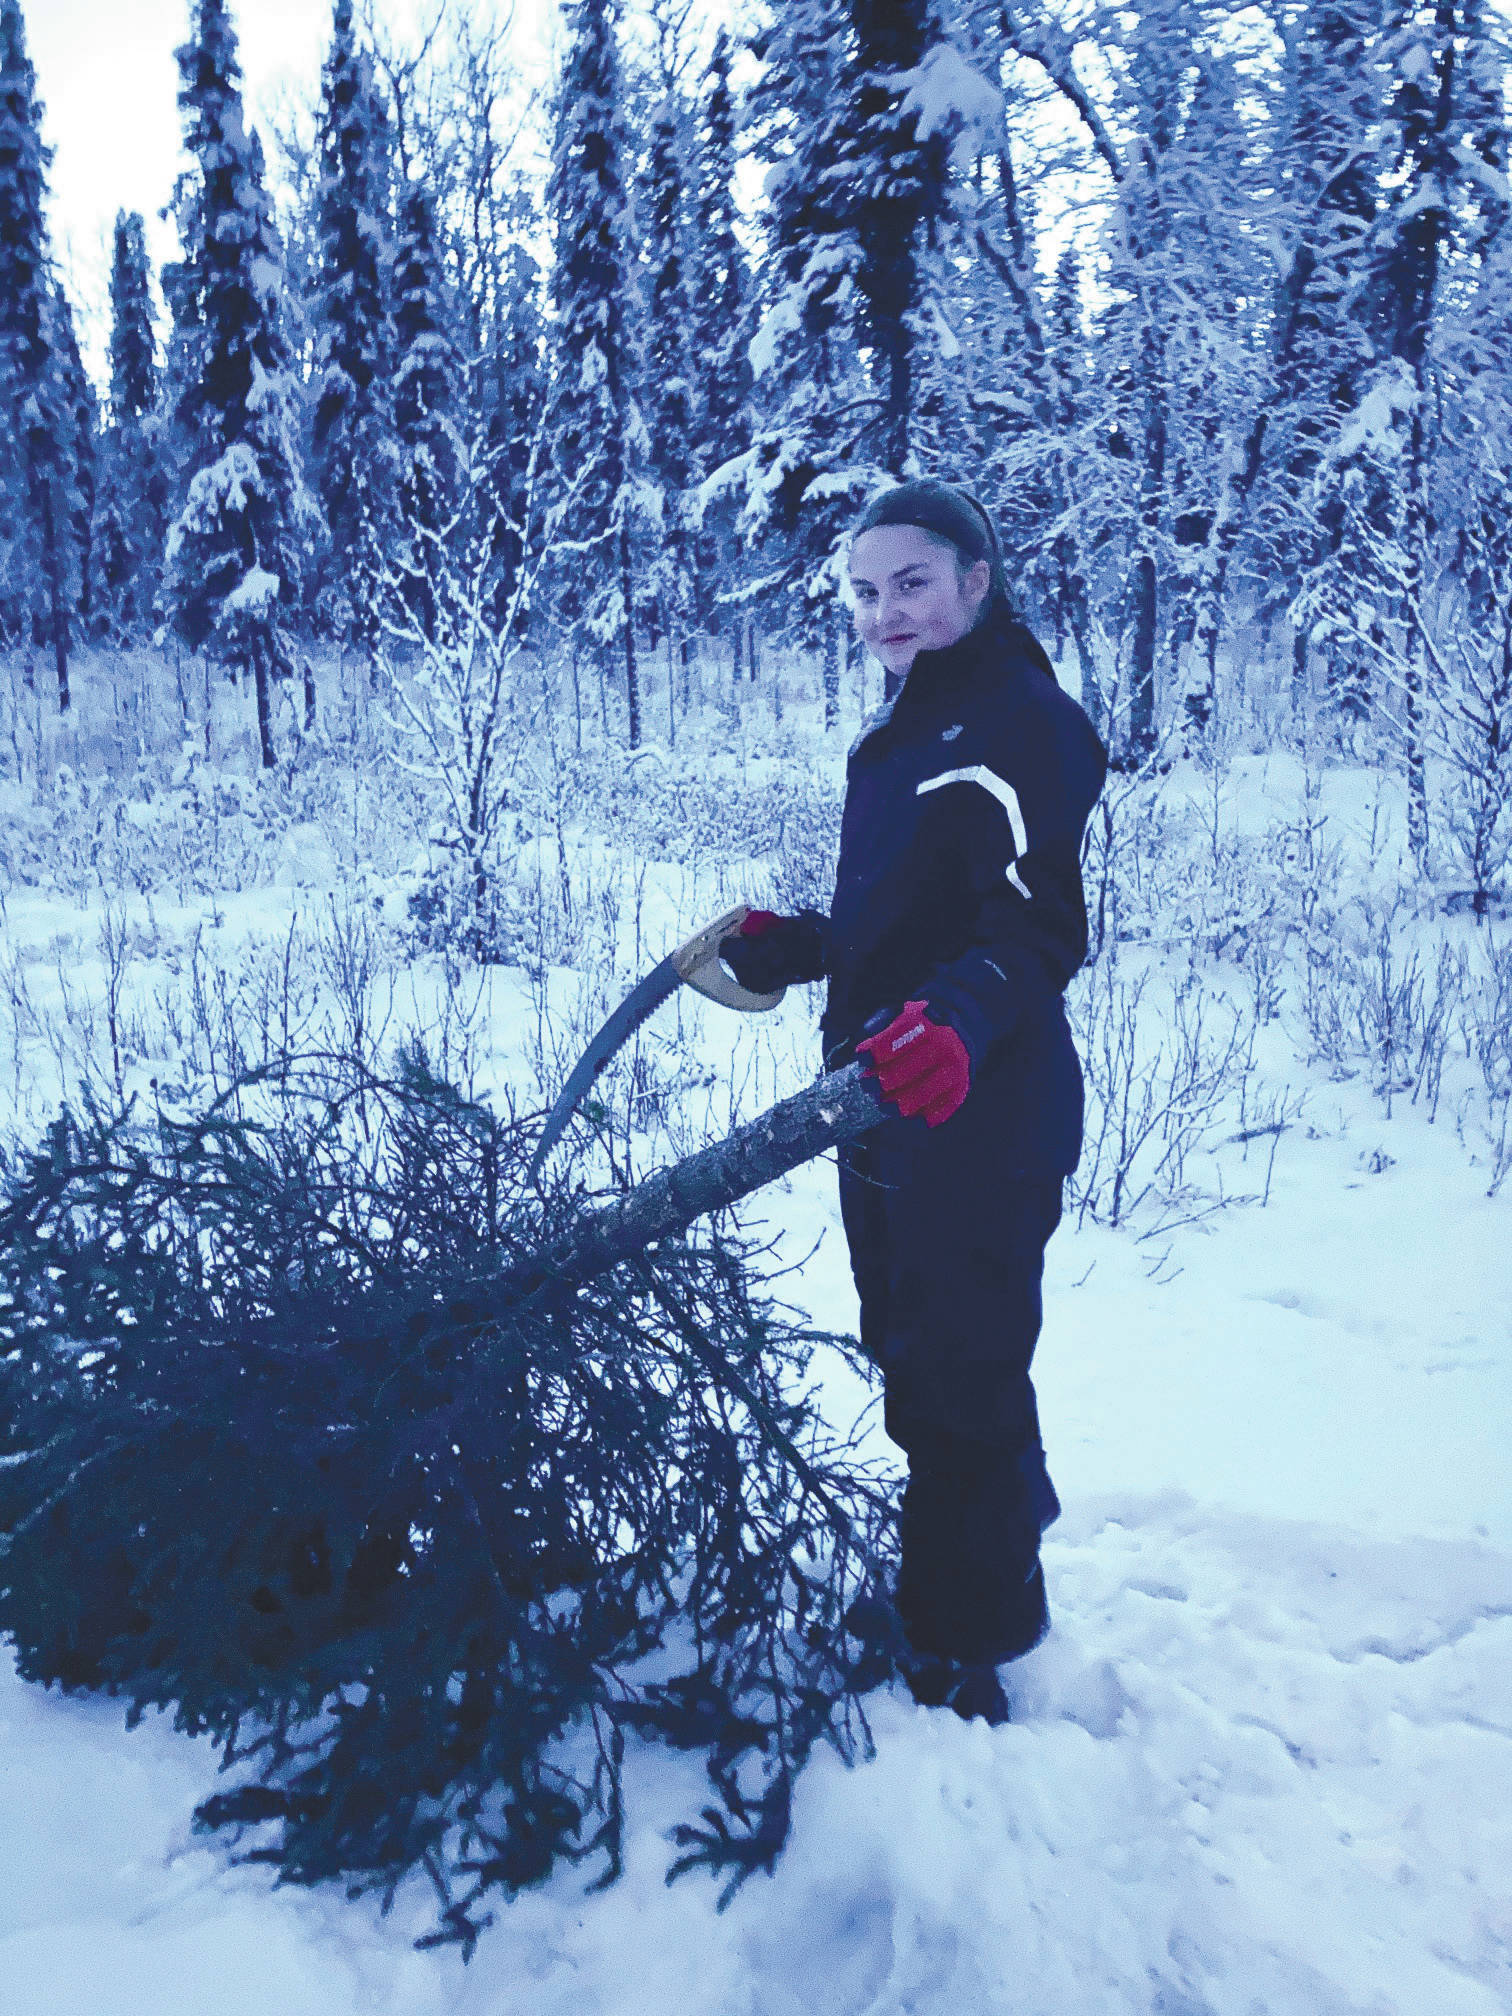 Photo by Matt Conner/USFWS 
Bailey, age 15, harvesting a Christmas tree on Kenai NWR.